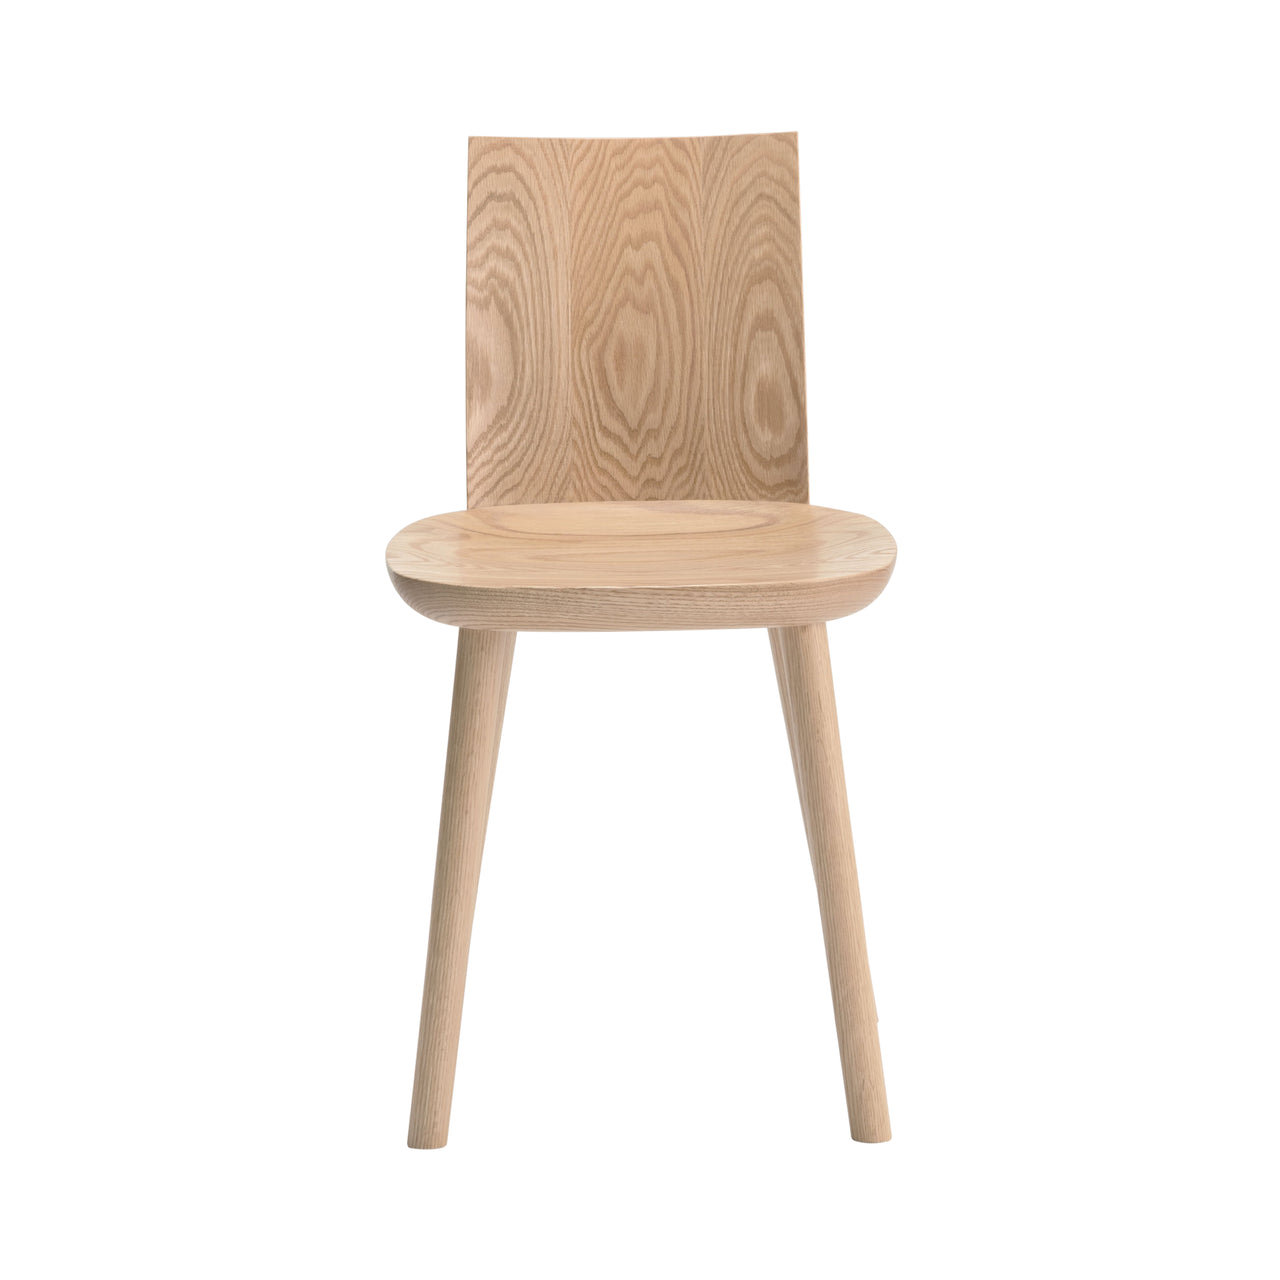 Blest Chair: White Oak